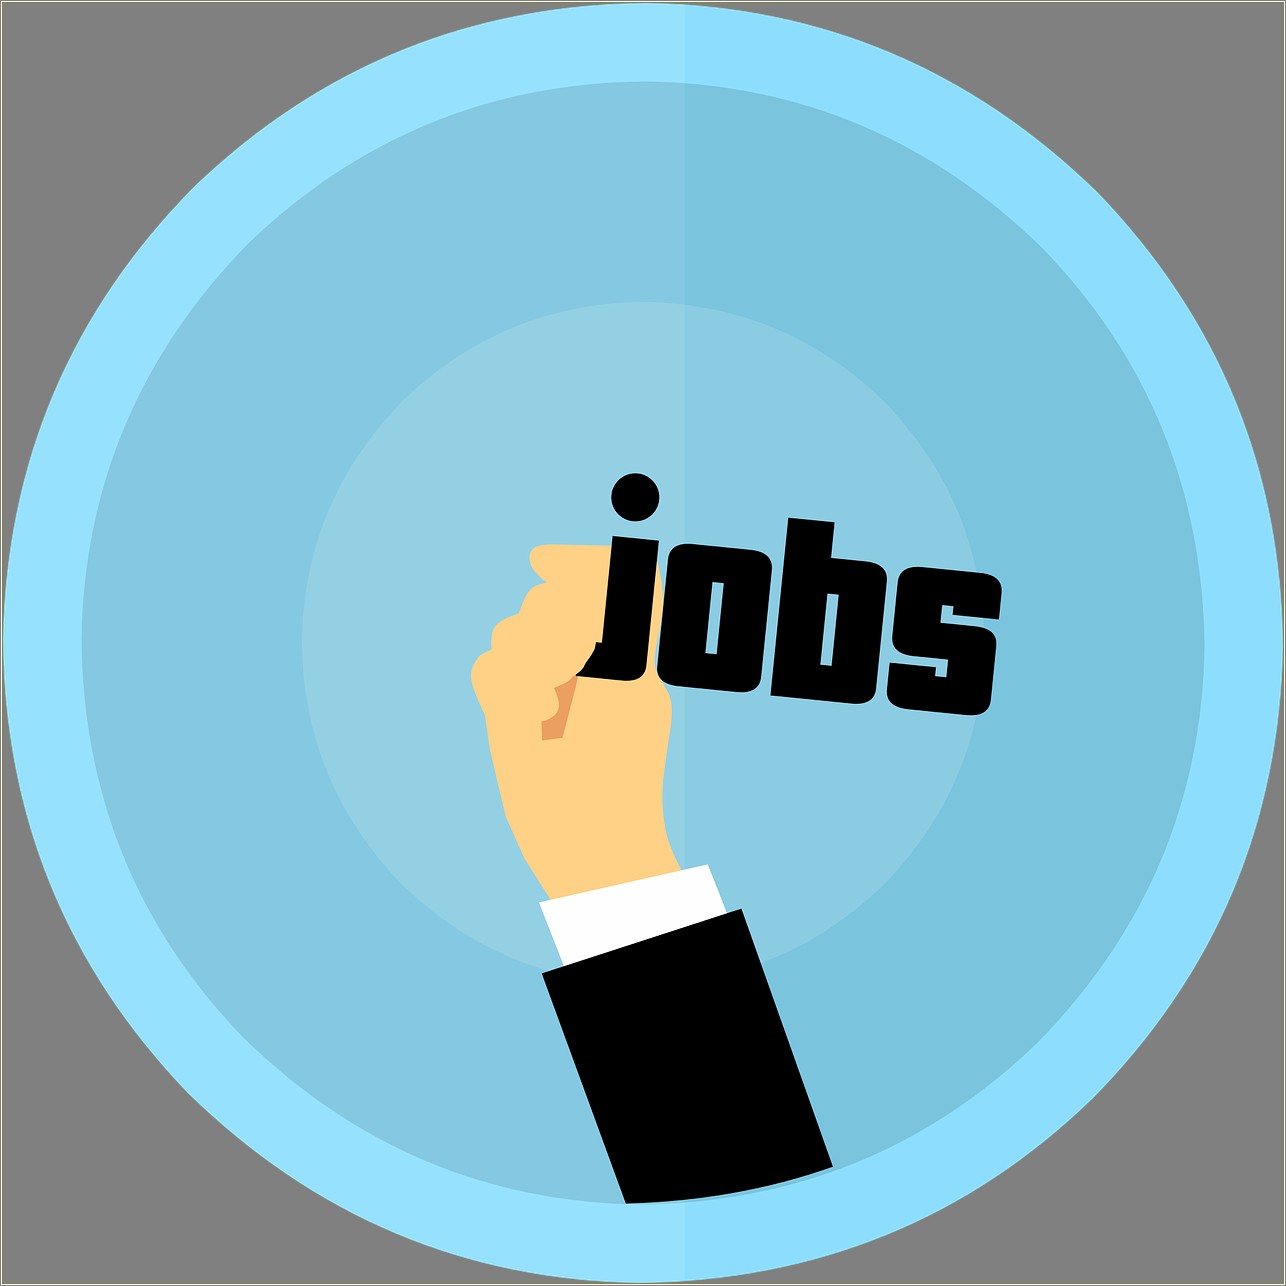 Job Agencies That Match Resume To Jobs